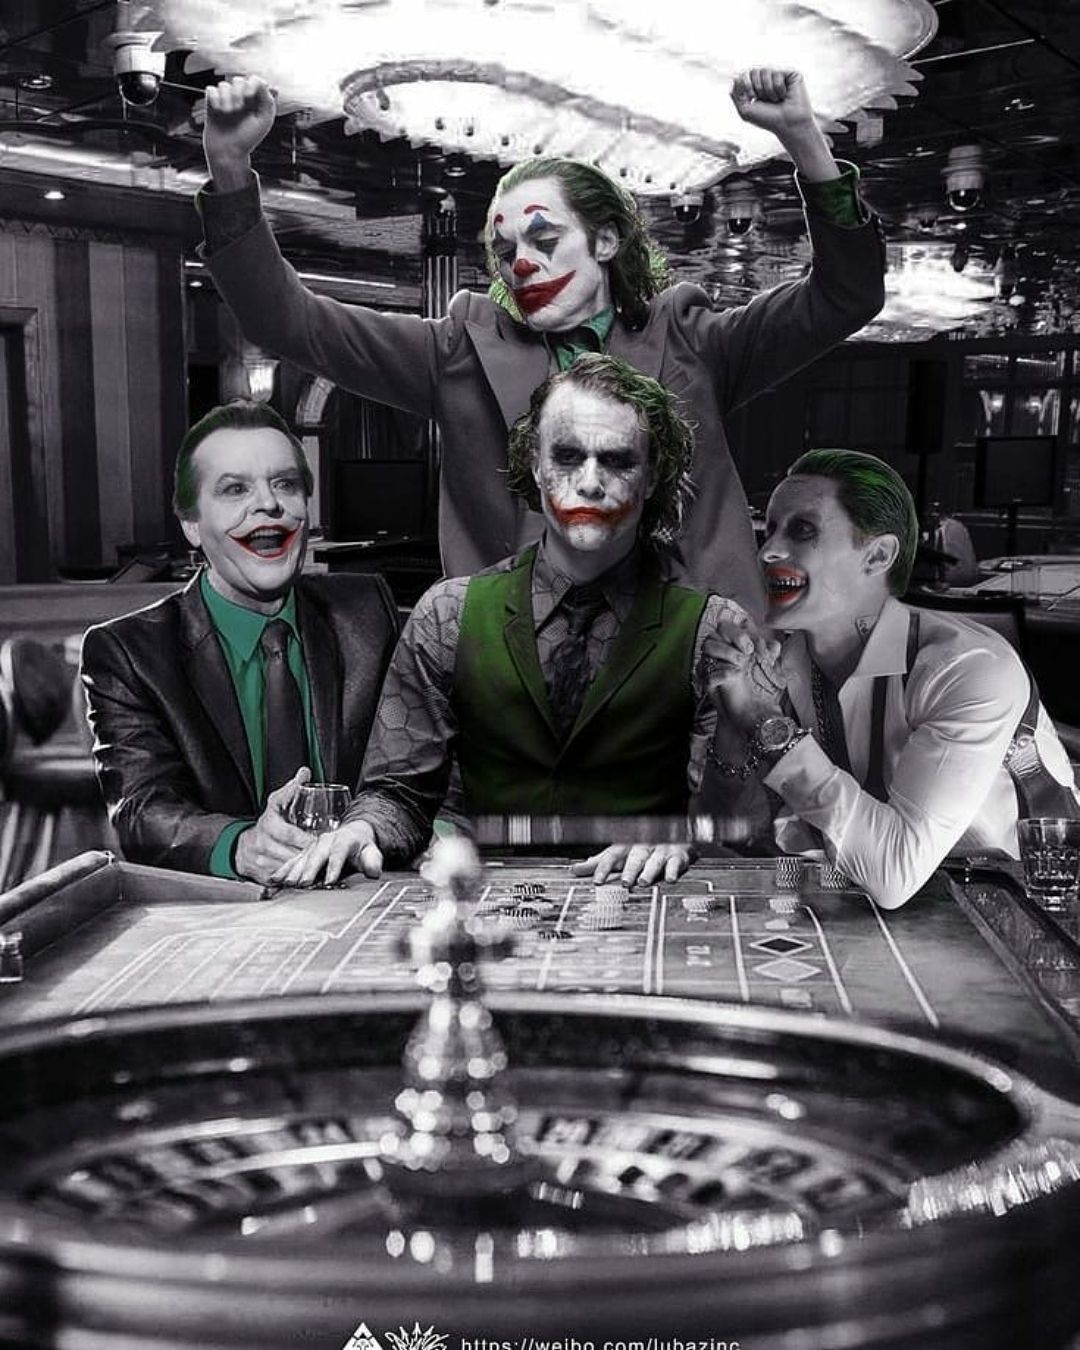 Get For Free The Joker Phone Case 2019 #jokerquote #jokerquotes